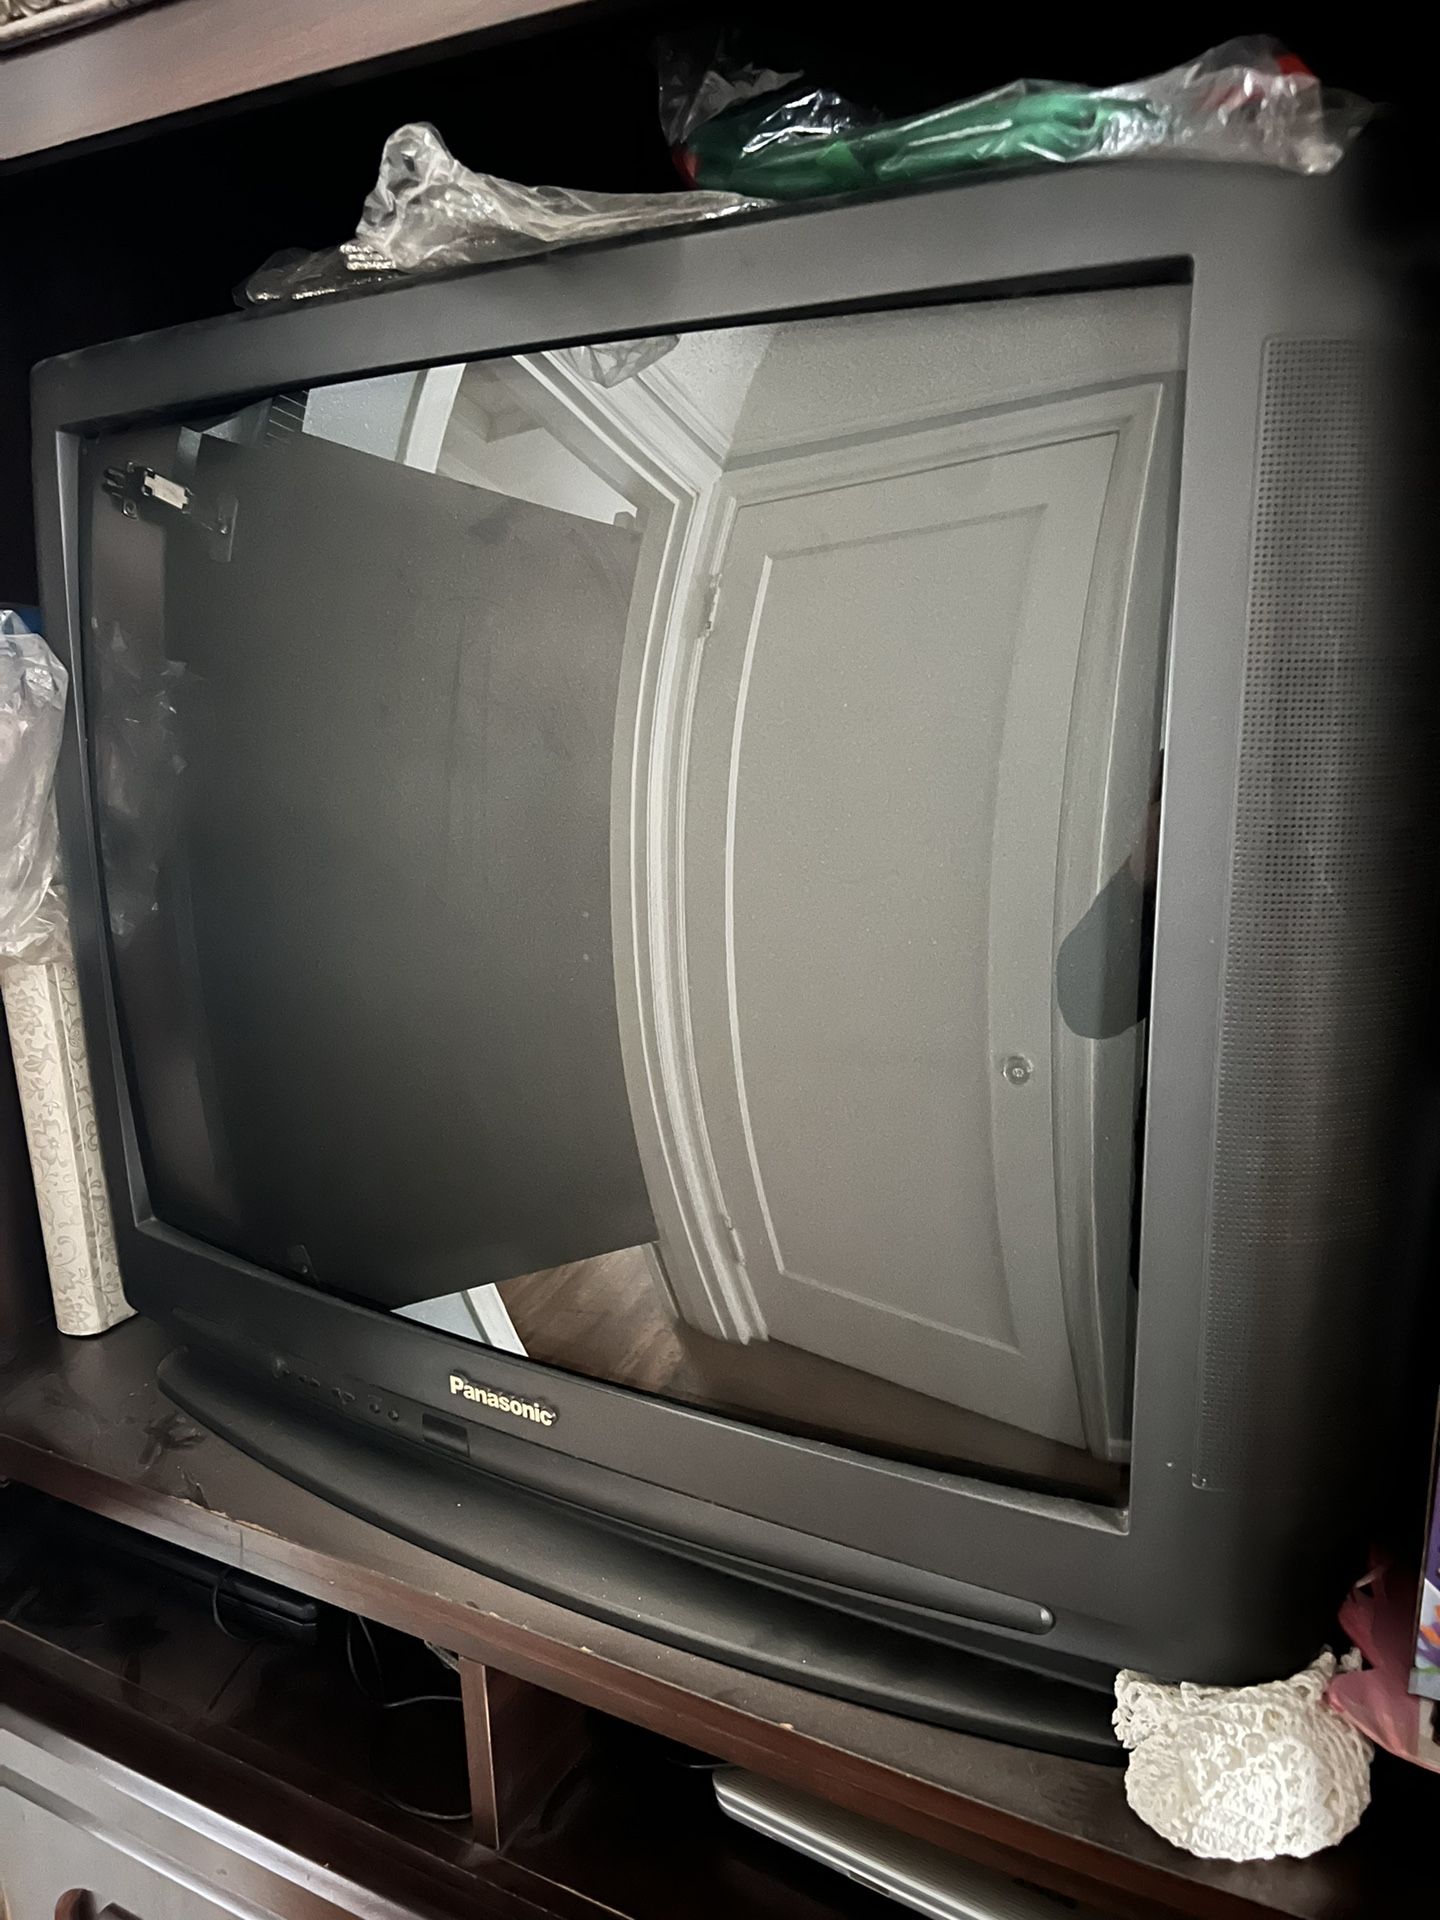 32” Vintage Panasonic Television